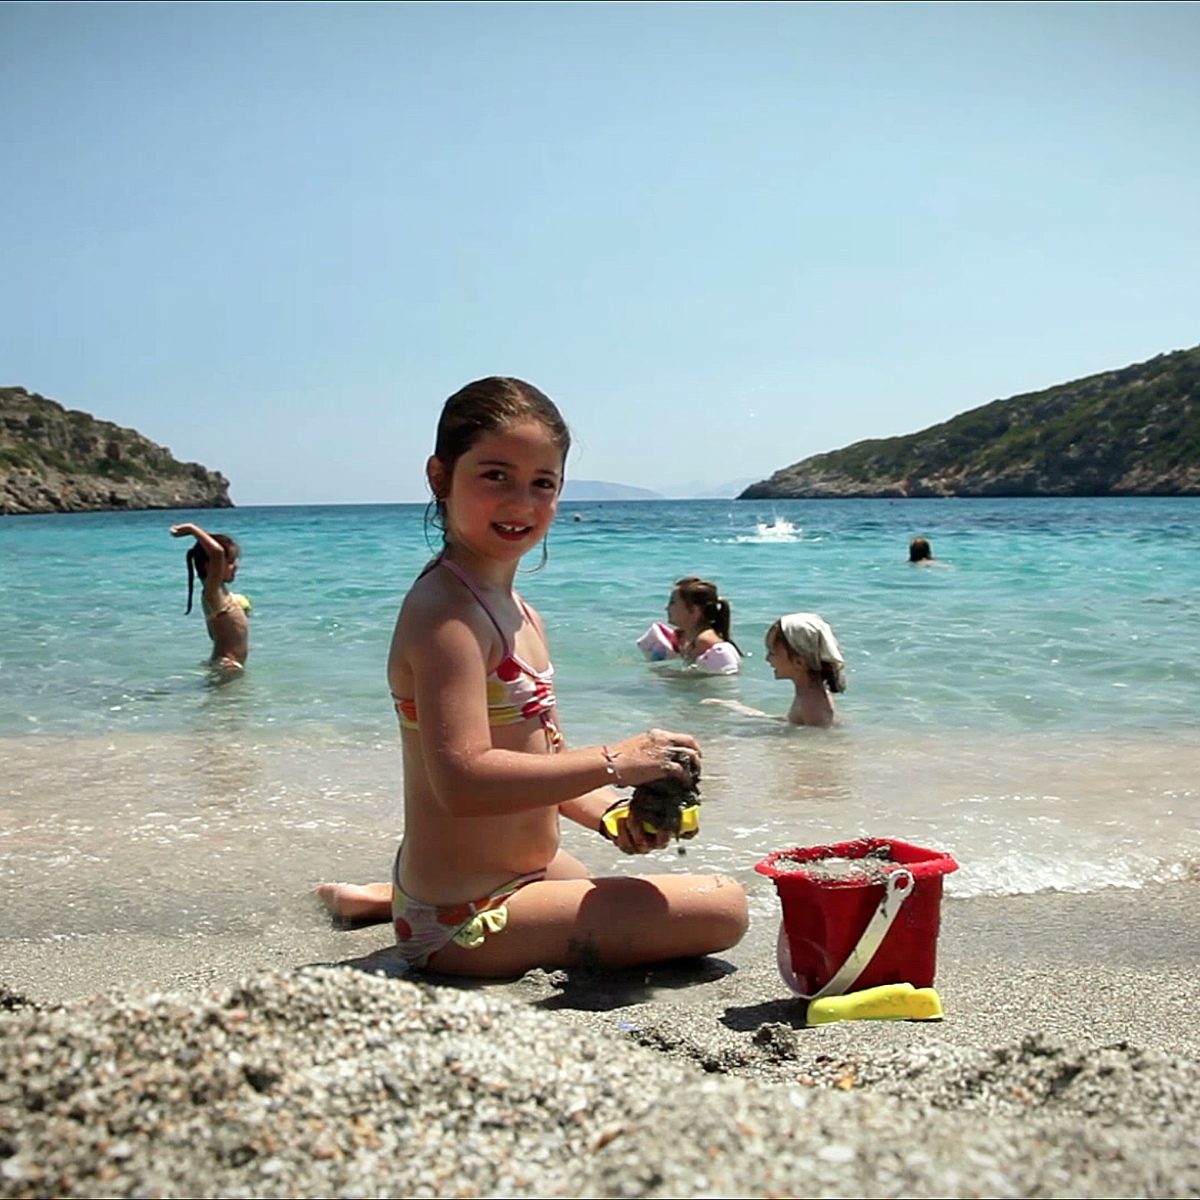 Club enfants bord de mer activités diverses à l'hôtel Daios Cove Luxury Resort & Villas en Crète